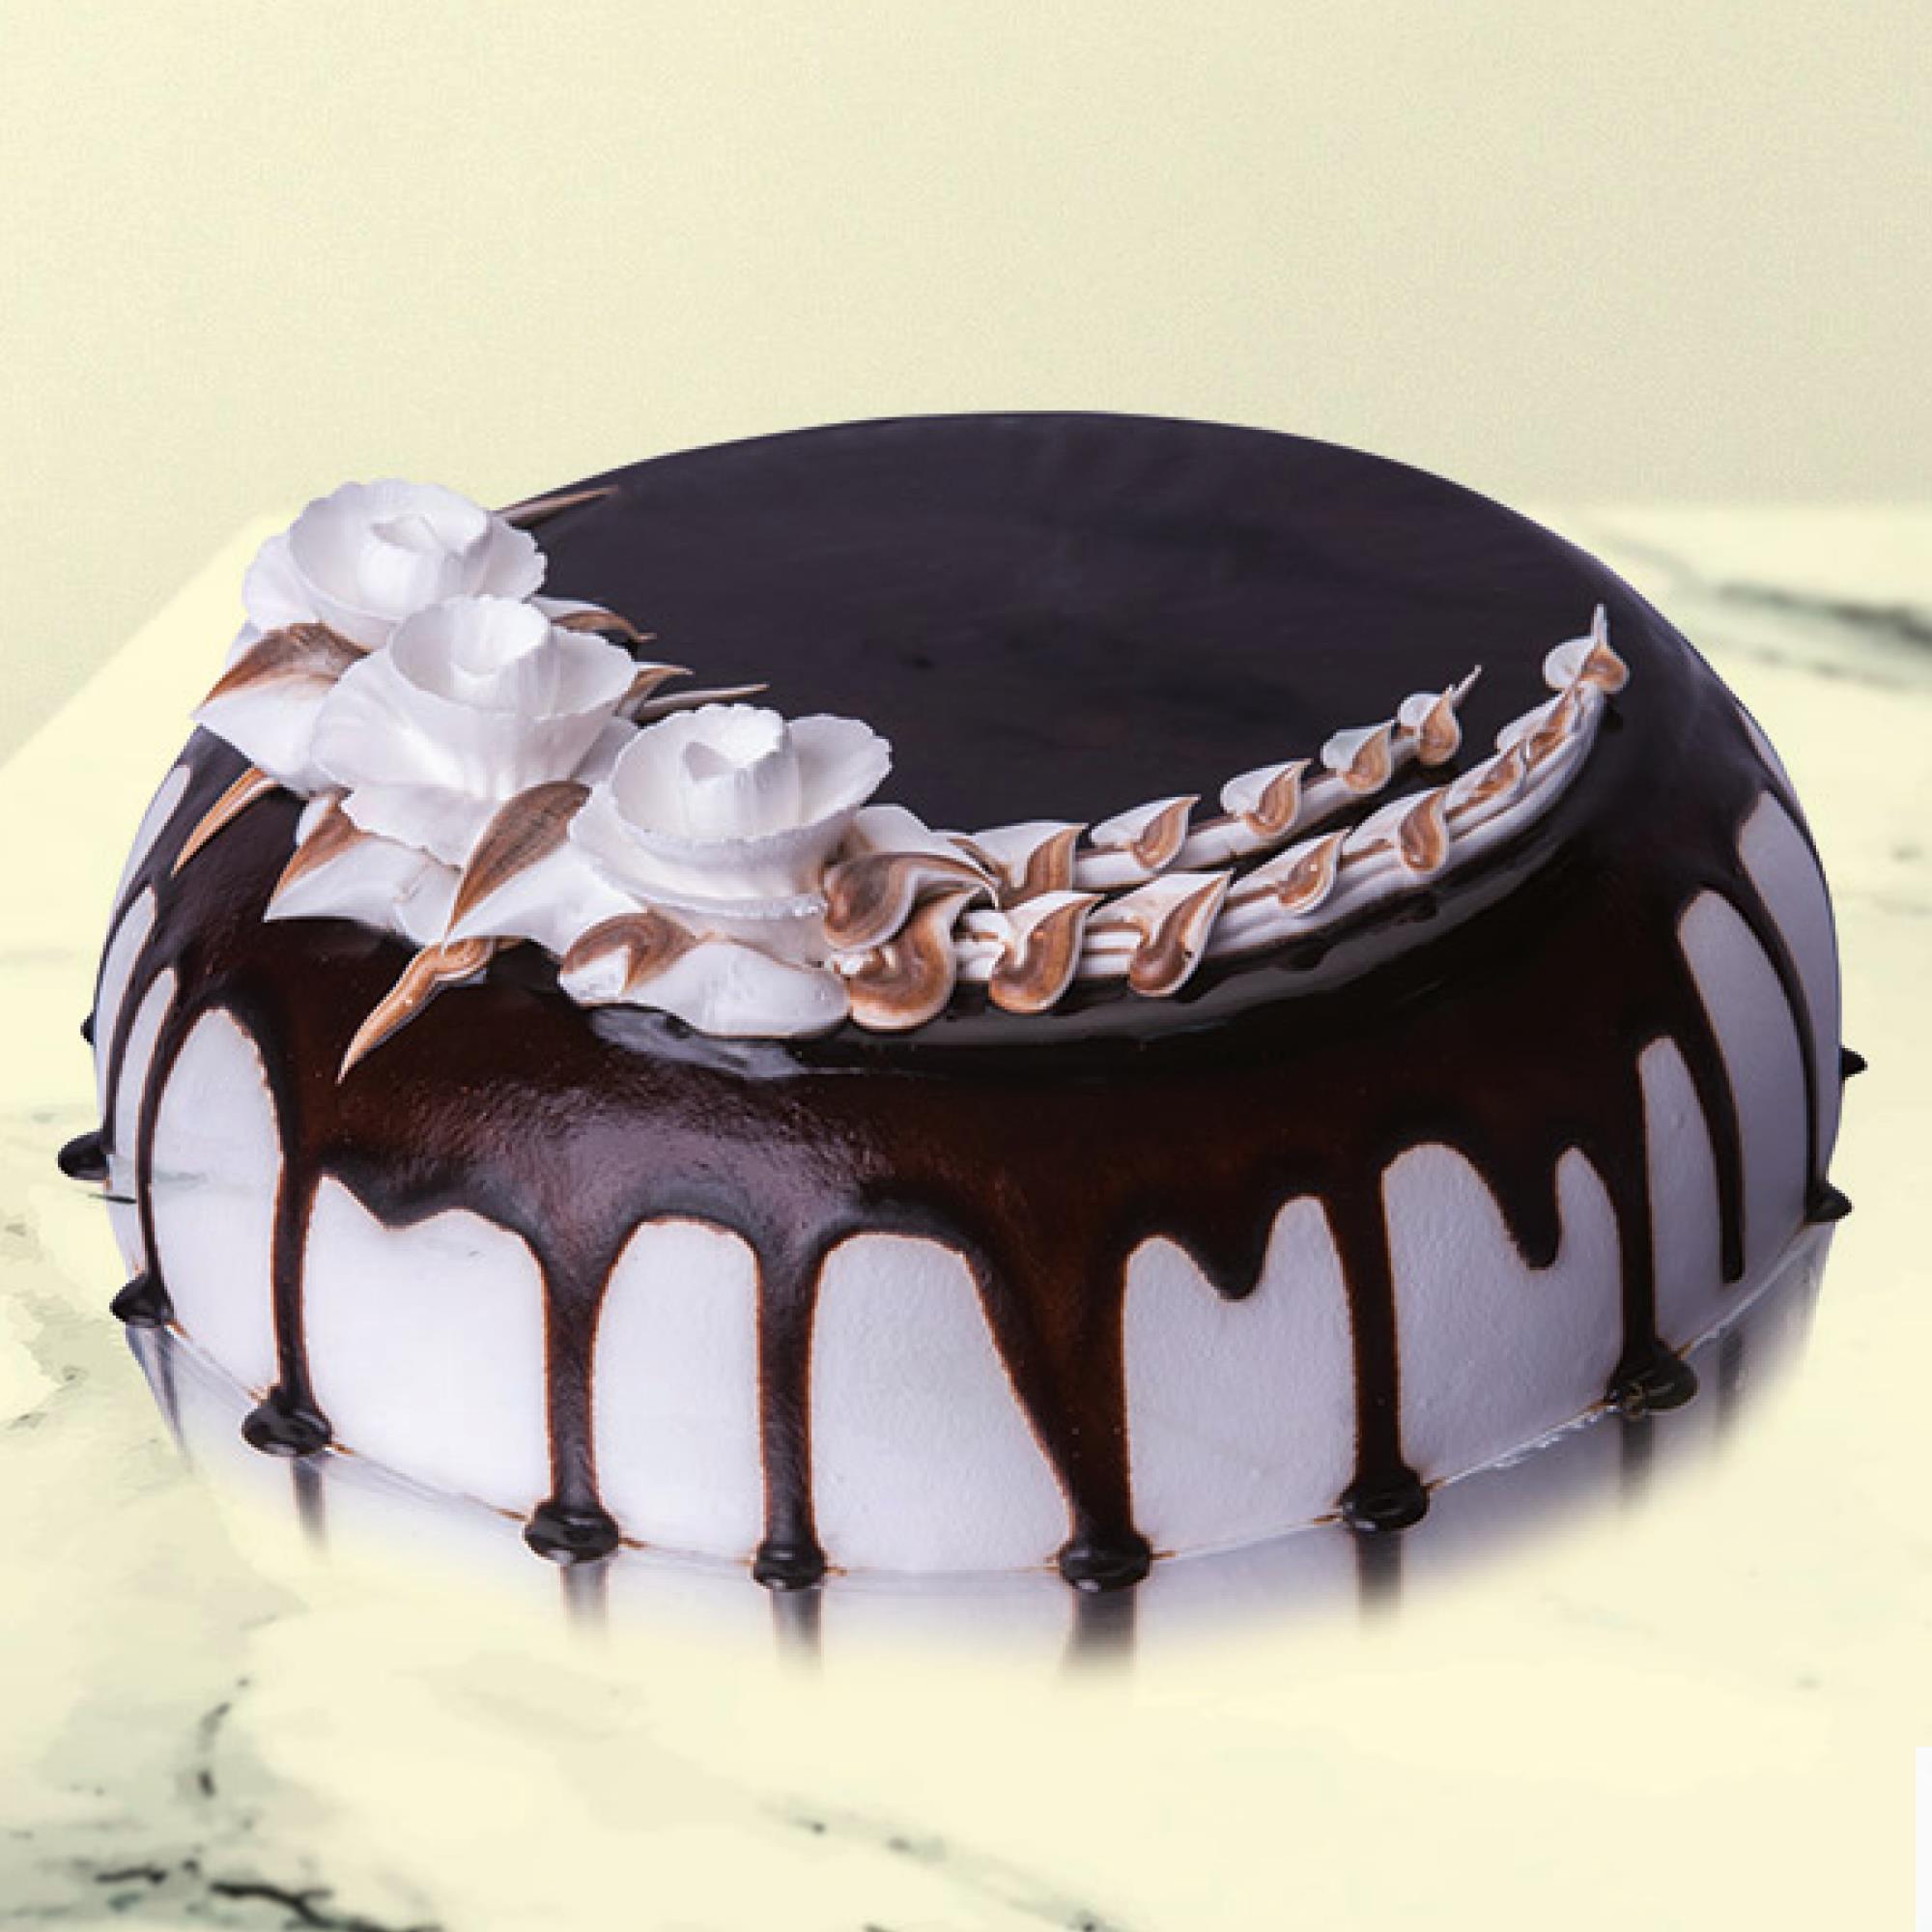 Buy Happy Birthday Chocolate Cake 1kg Online , Send Gifts To India -  OyeGifts.com